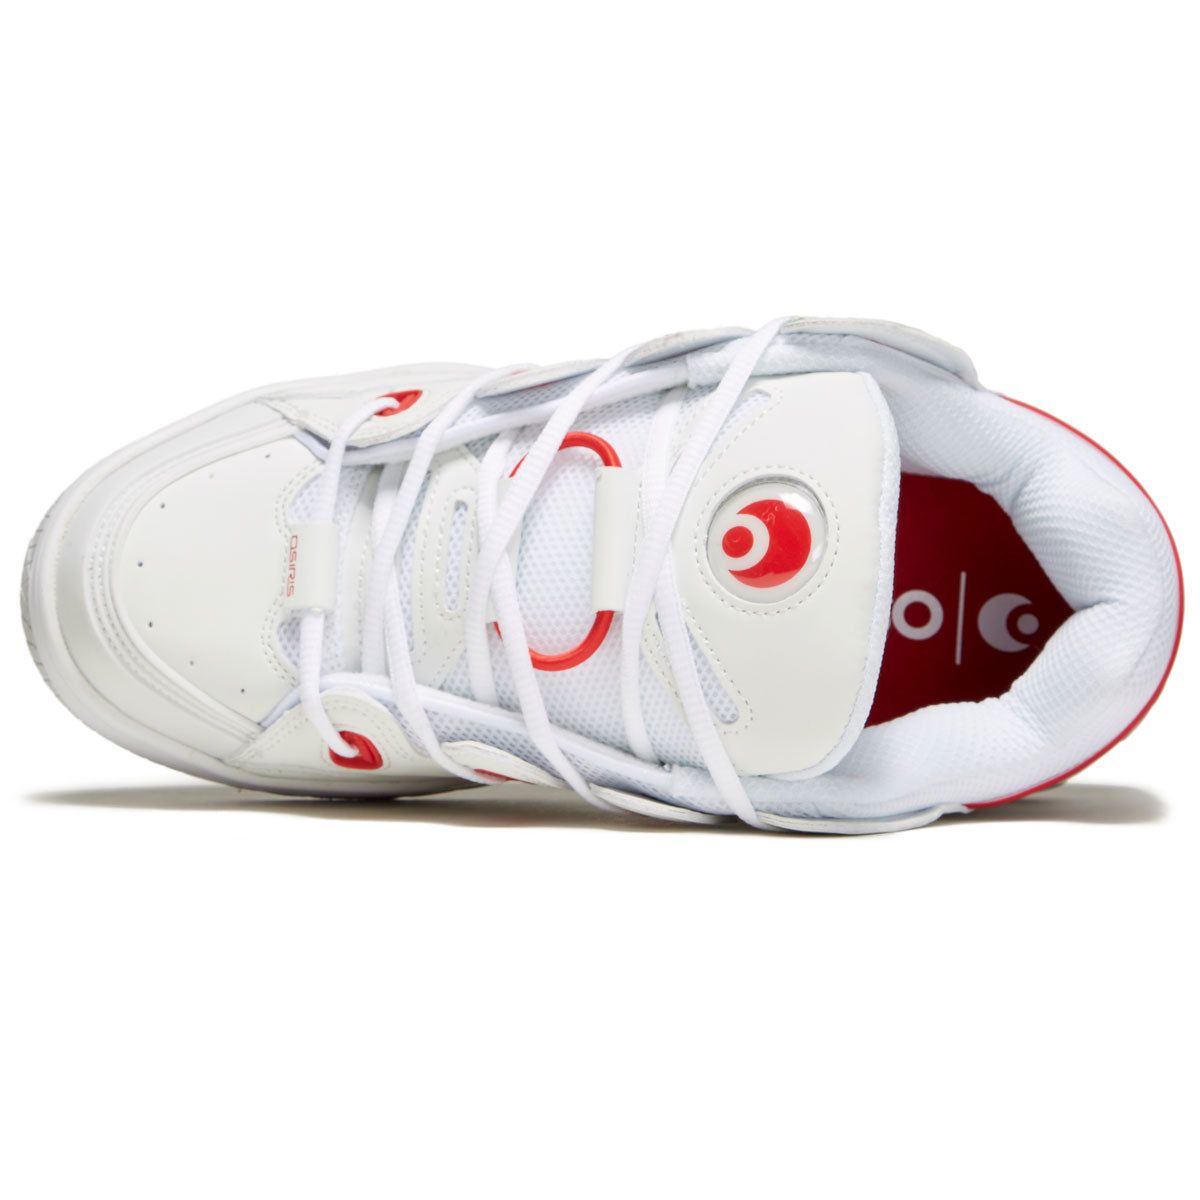 Osiris D3 Og Shoes - White/Red/Grey image 3